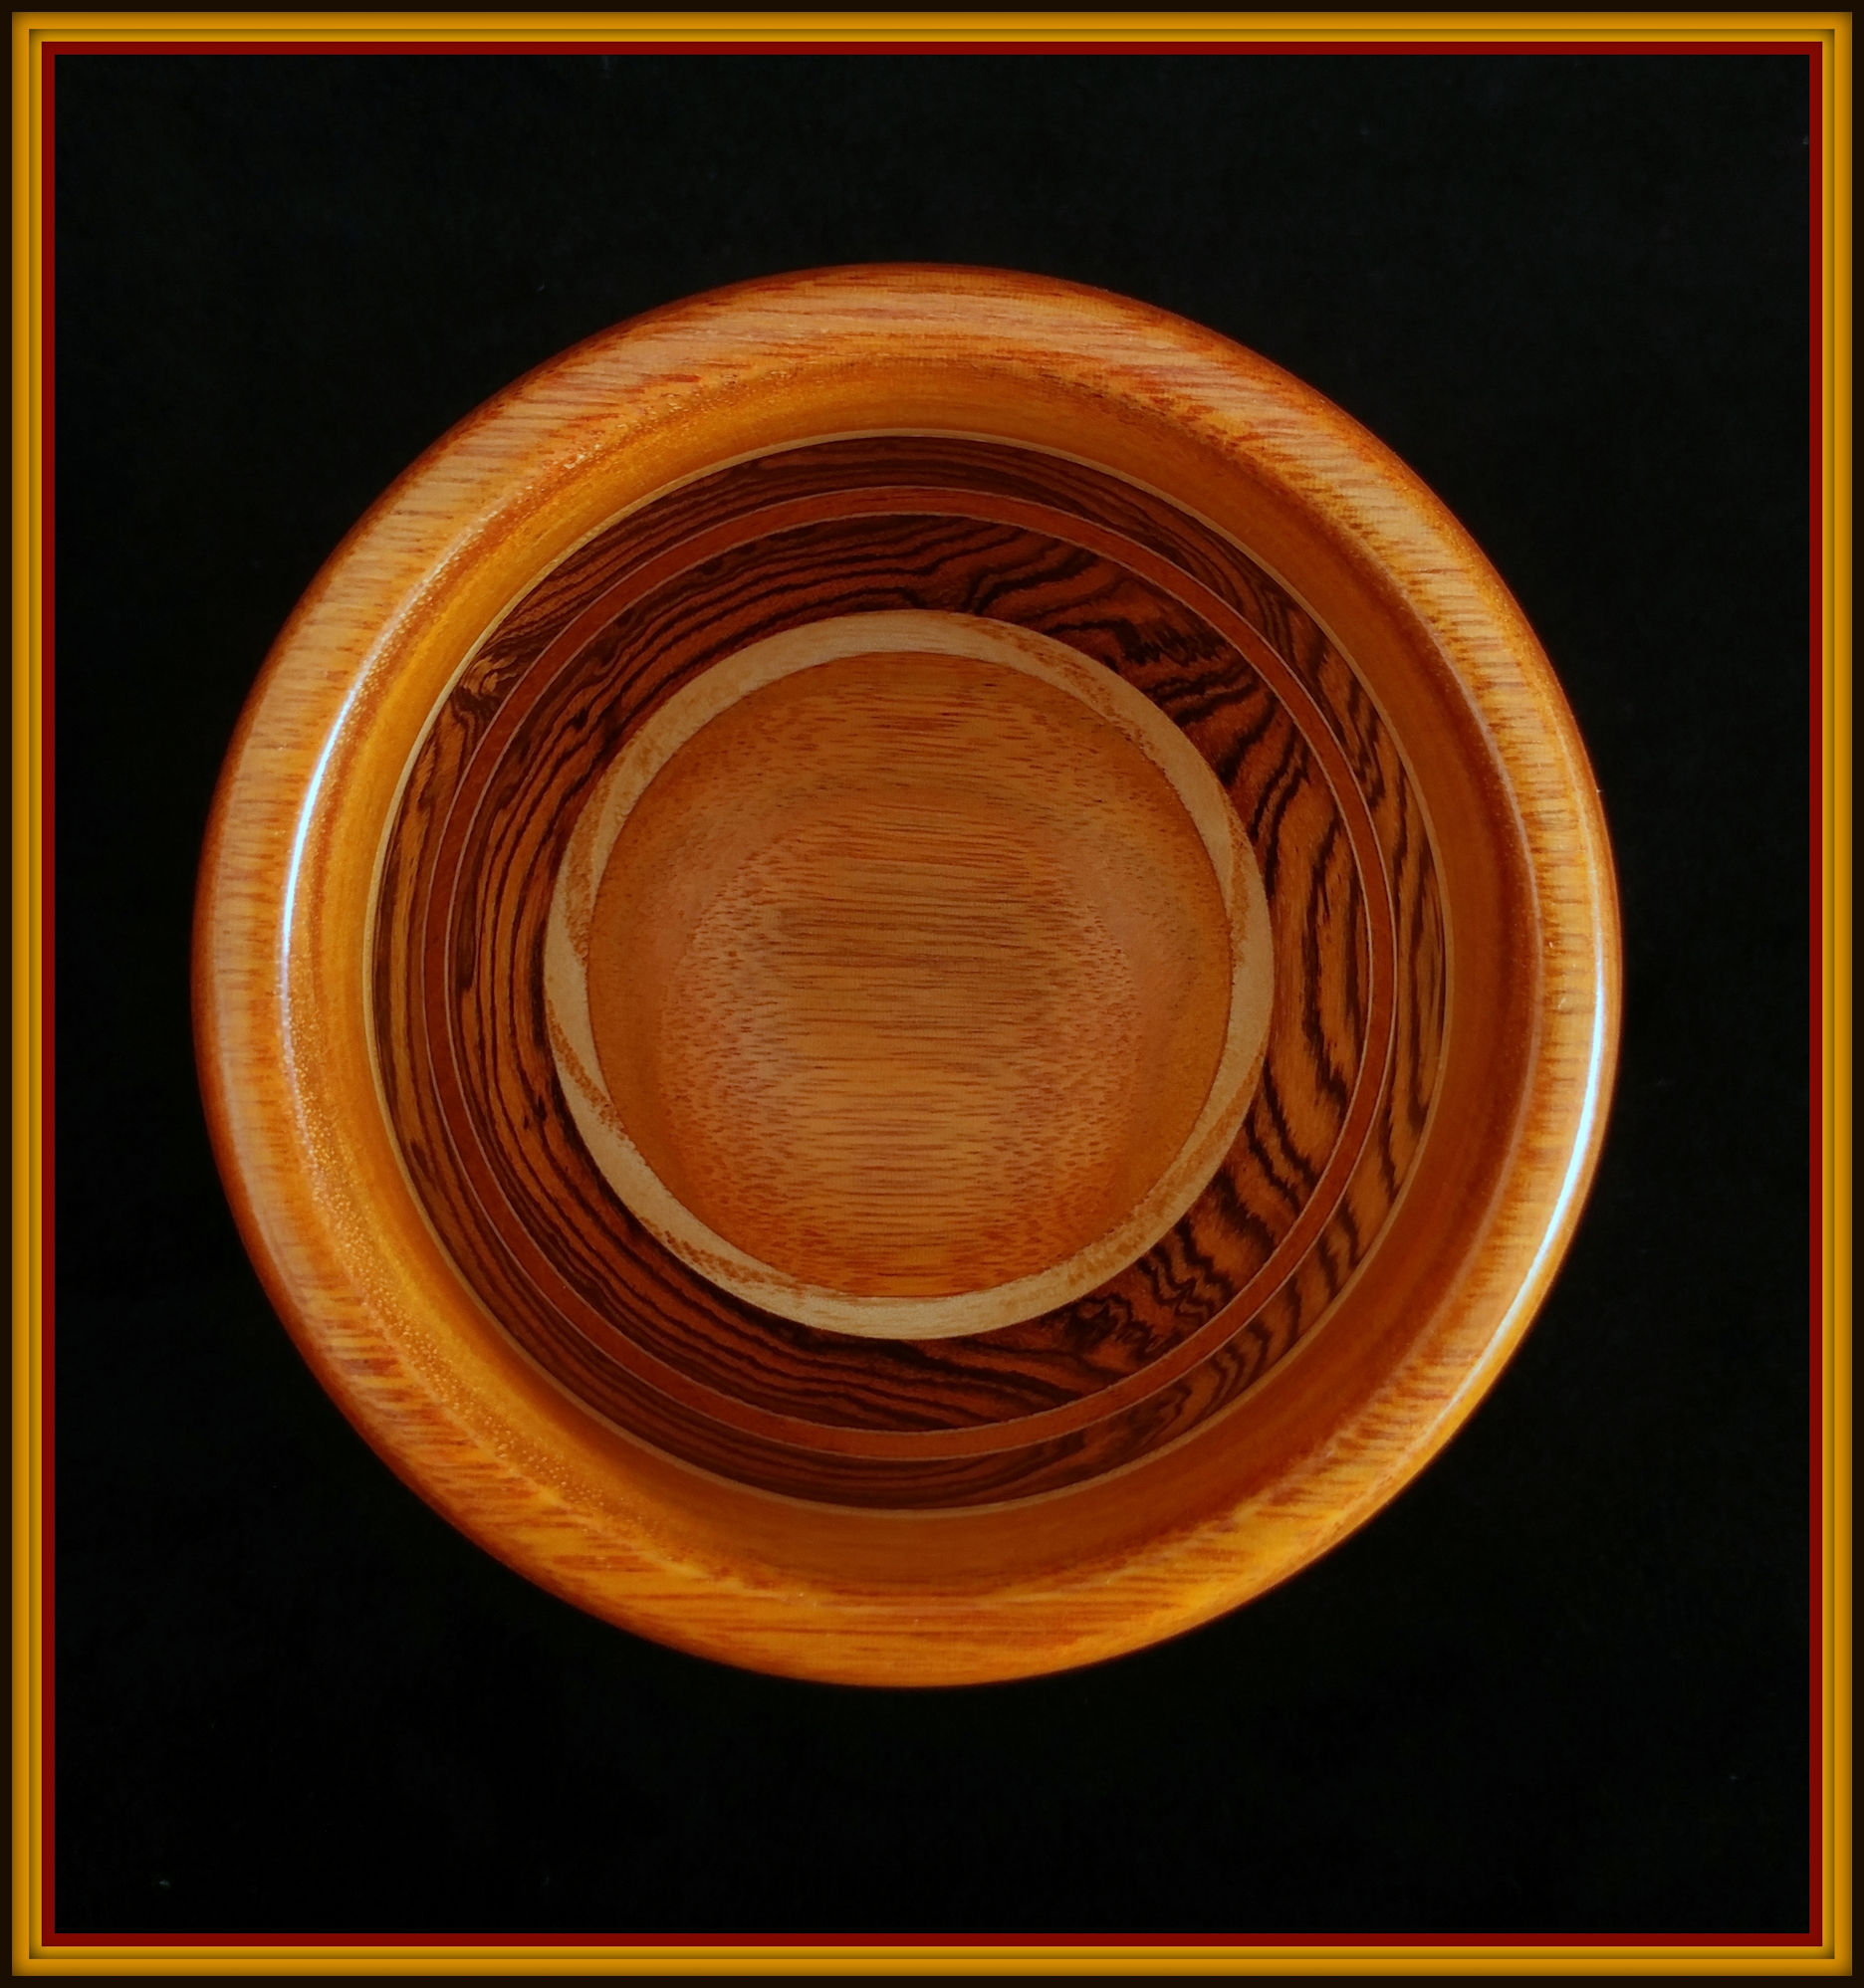 Segmented Miniature Bowl #2